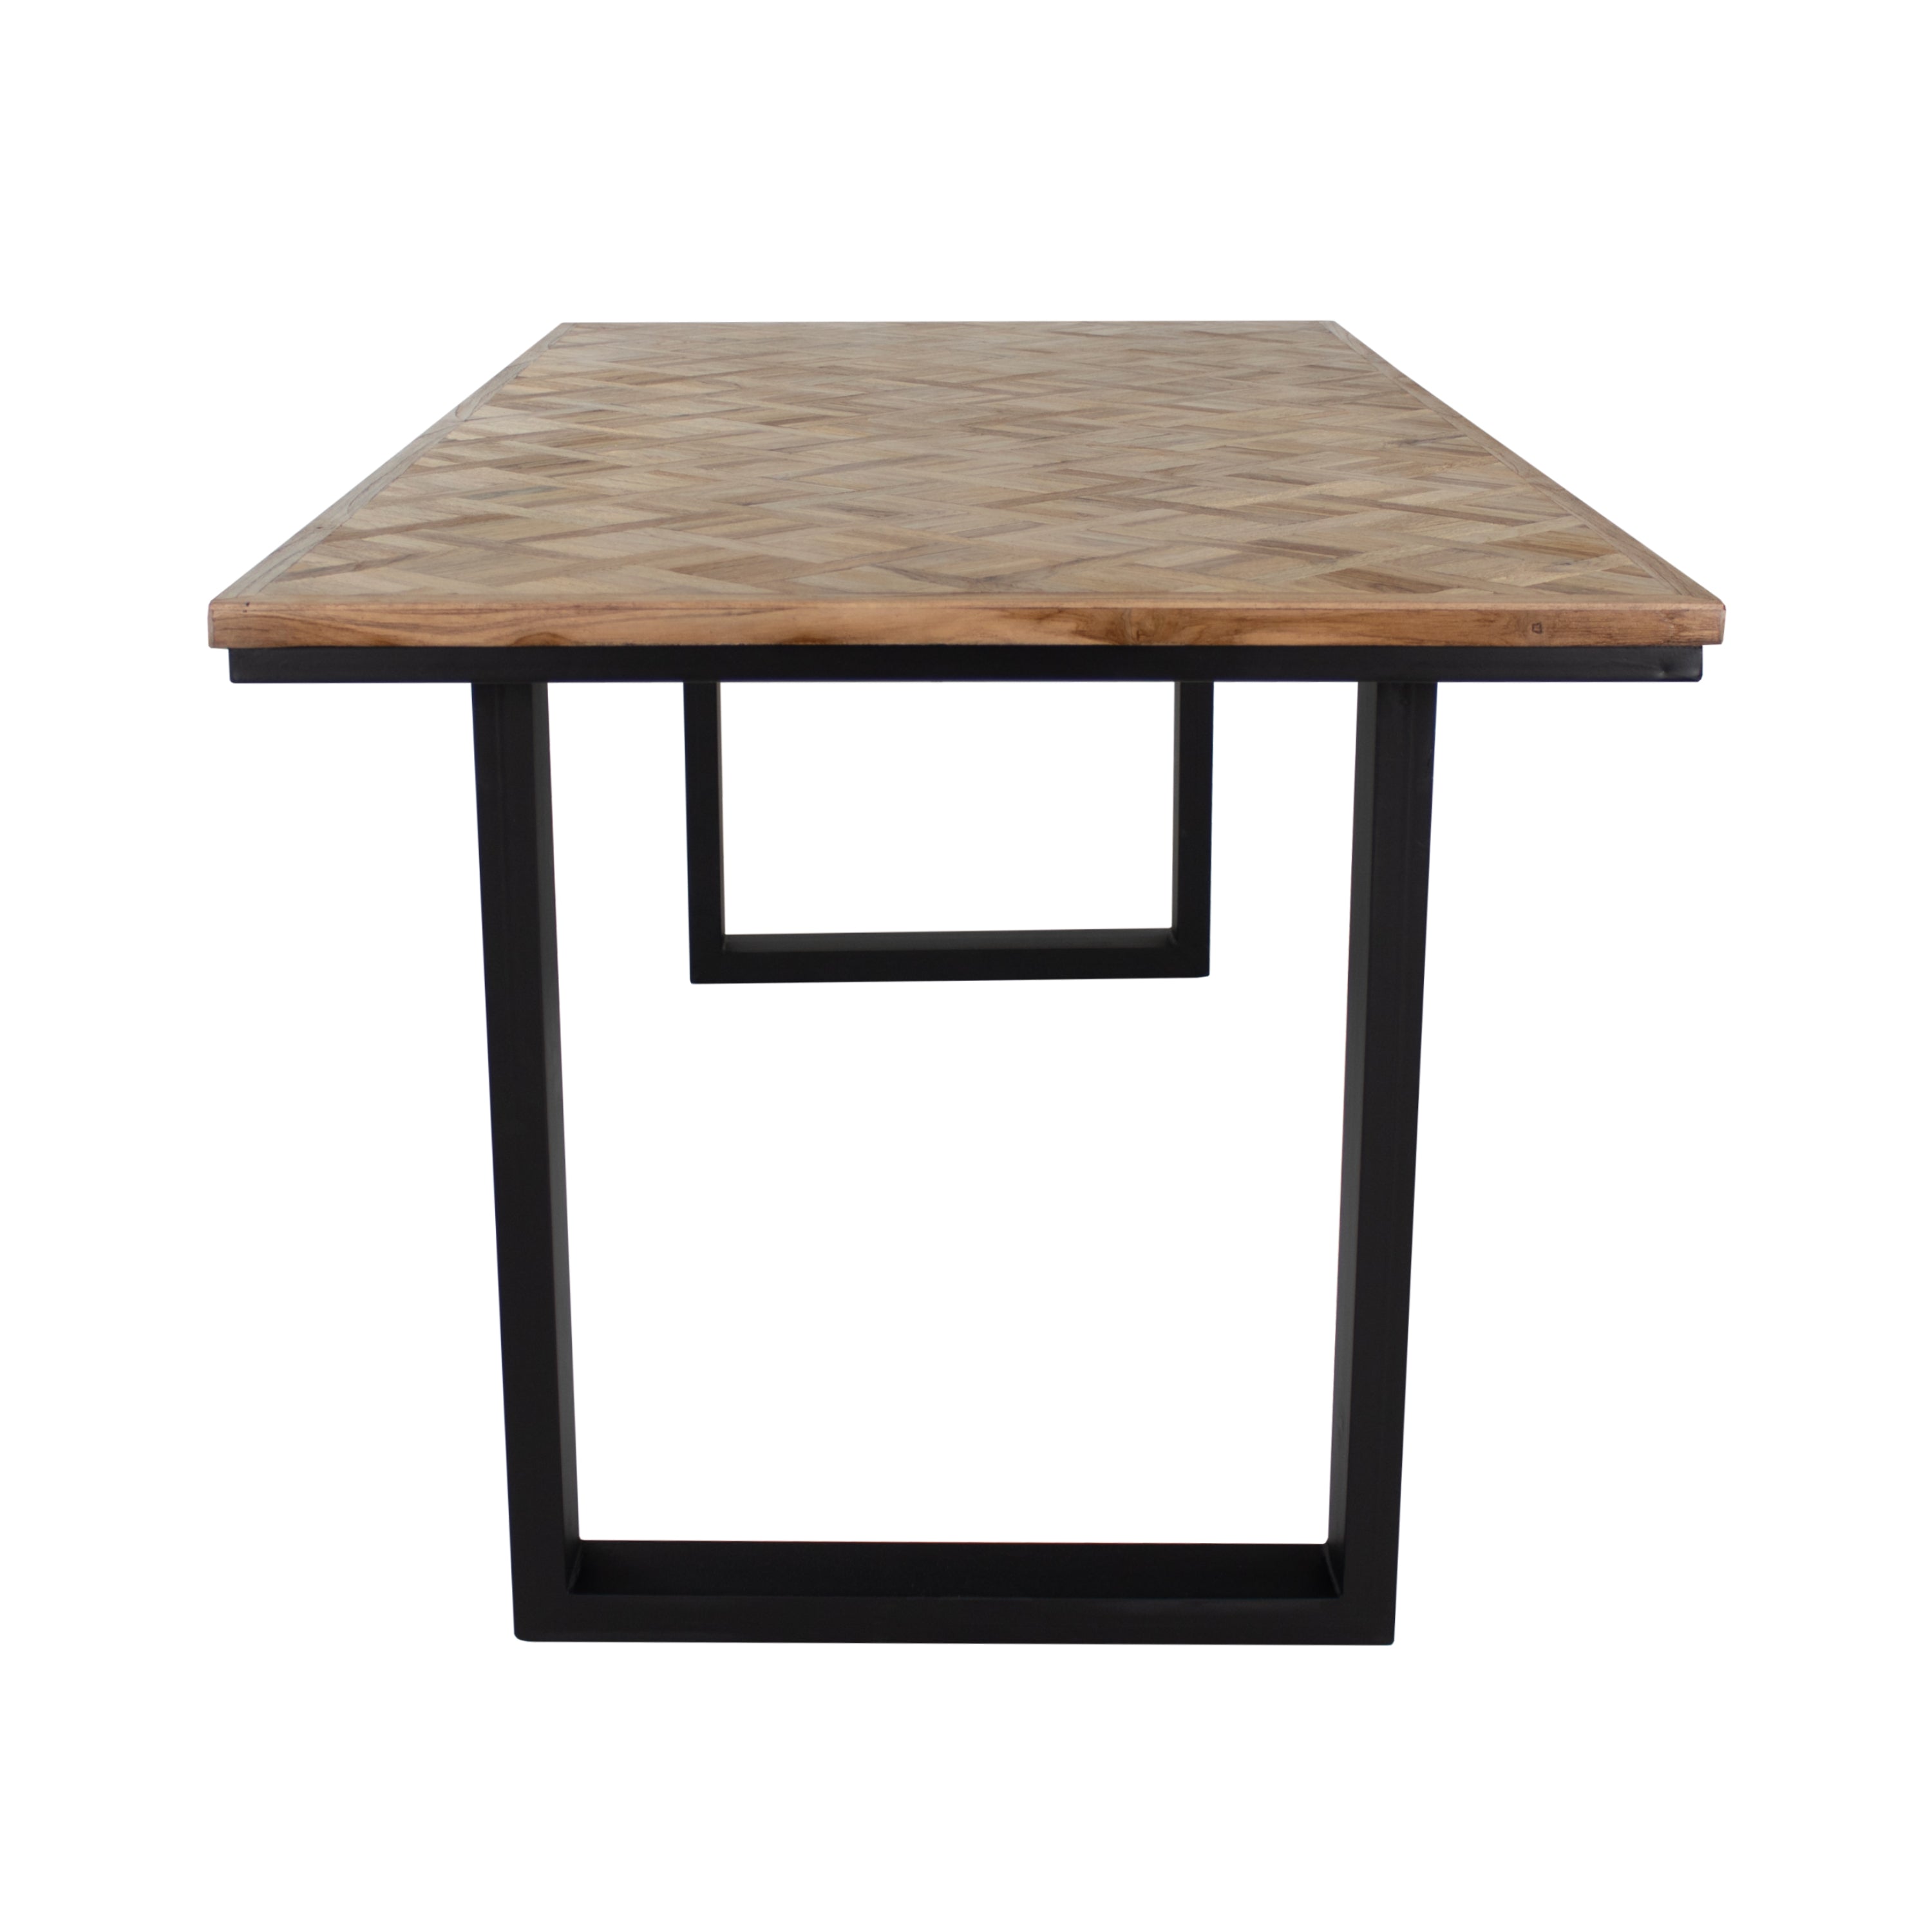 Kick dining table Jesper - 200cm